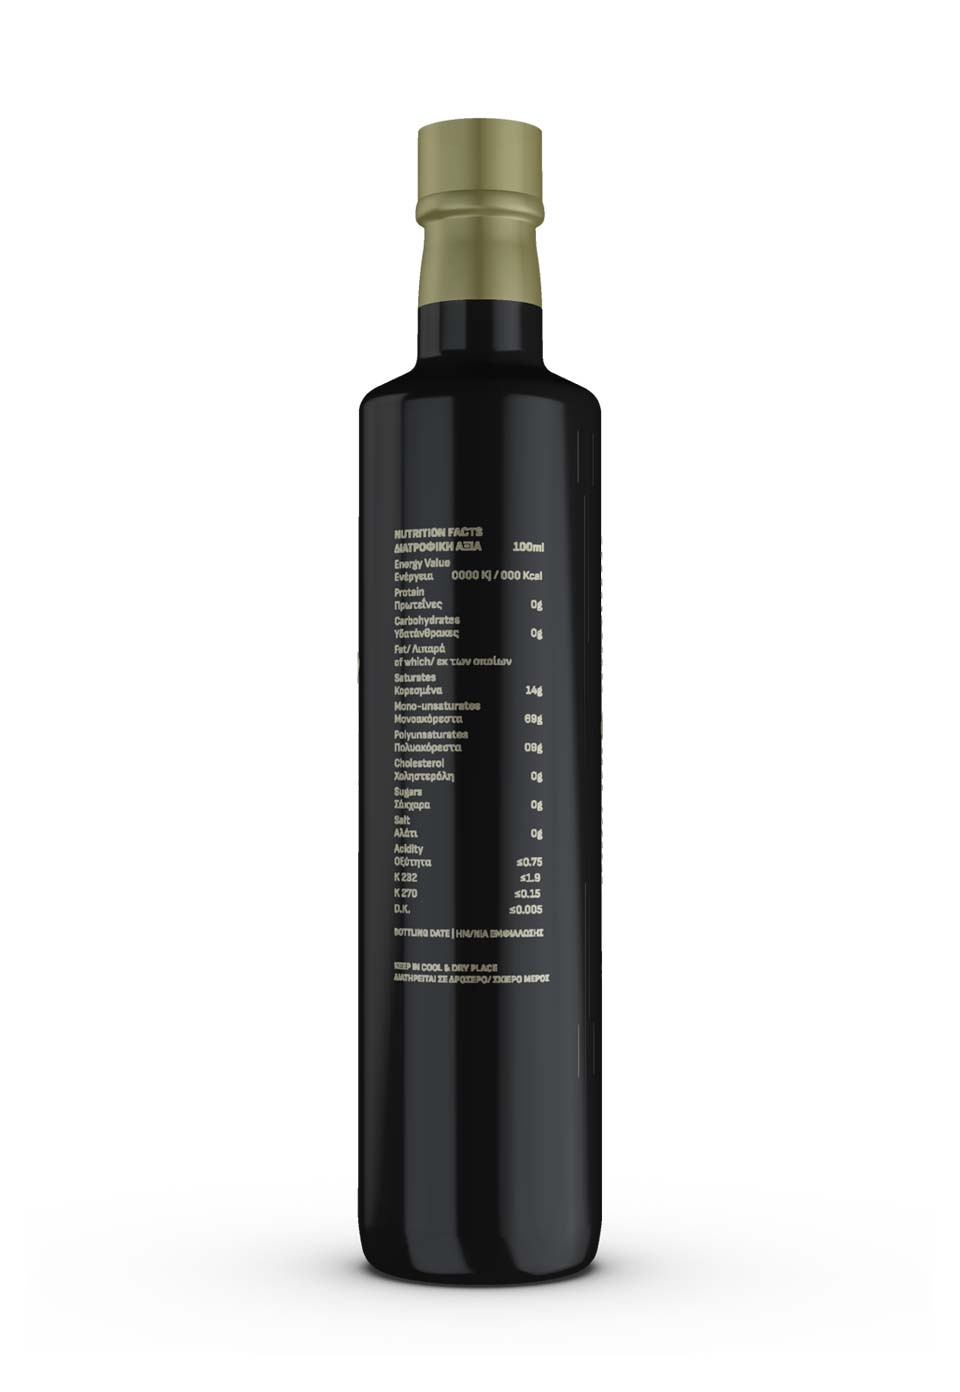 Greek olive oil package, logo and labeling design | NO IDEA ®